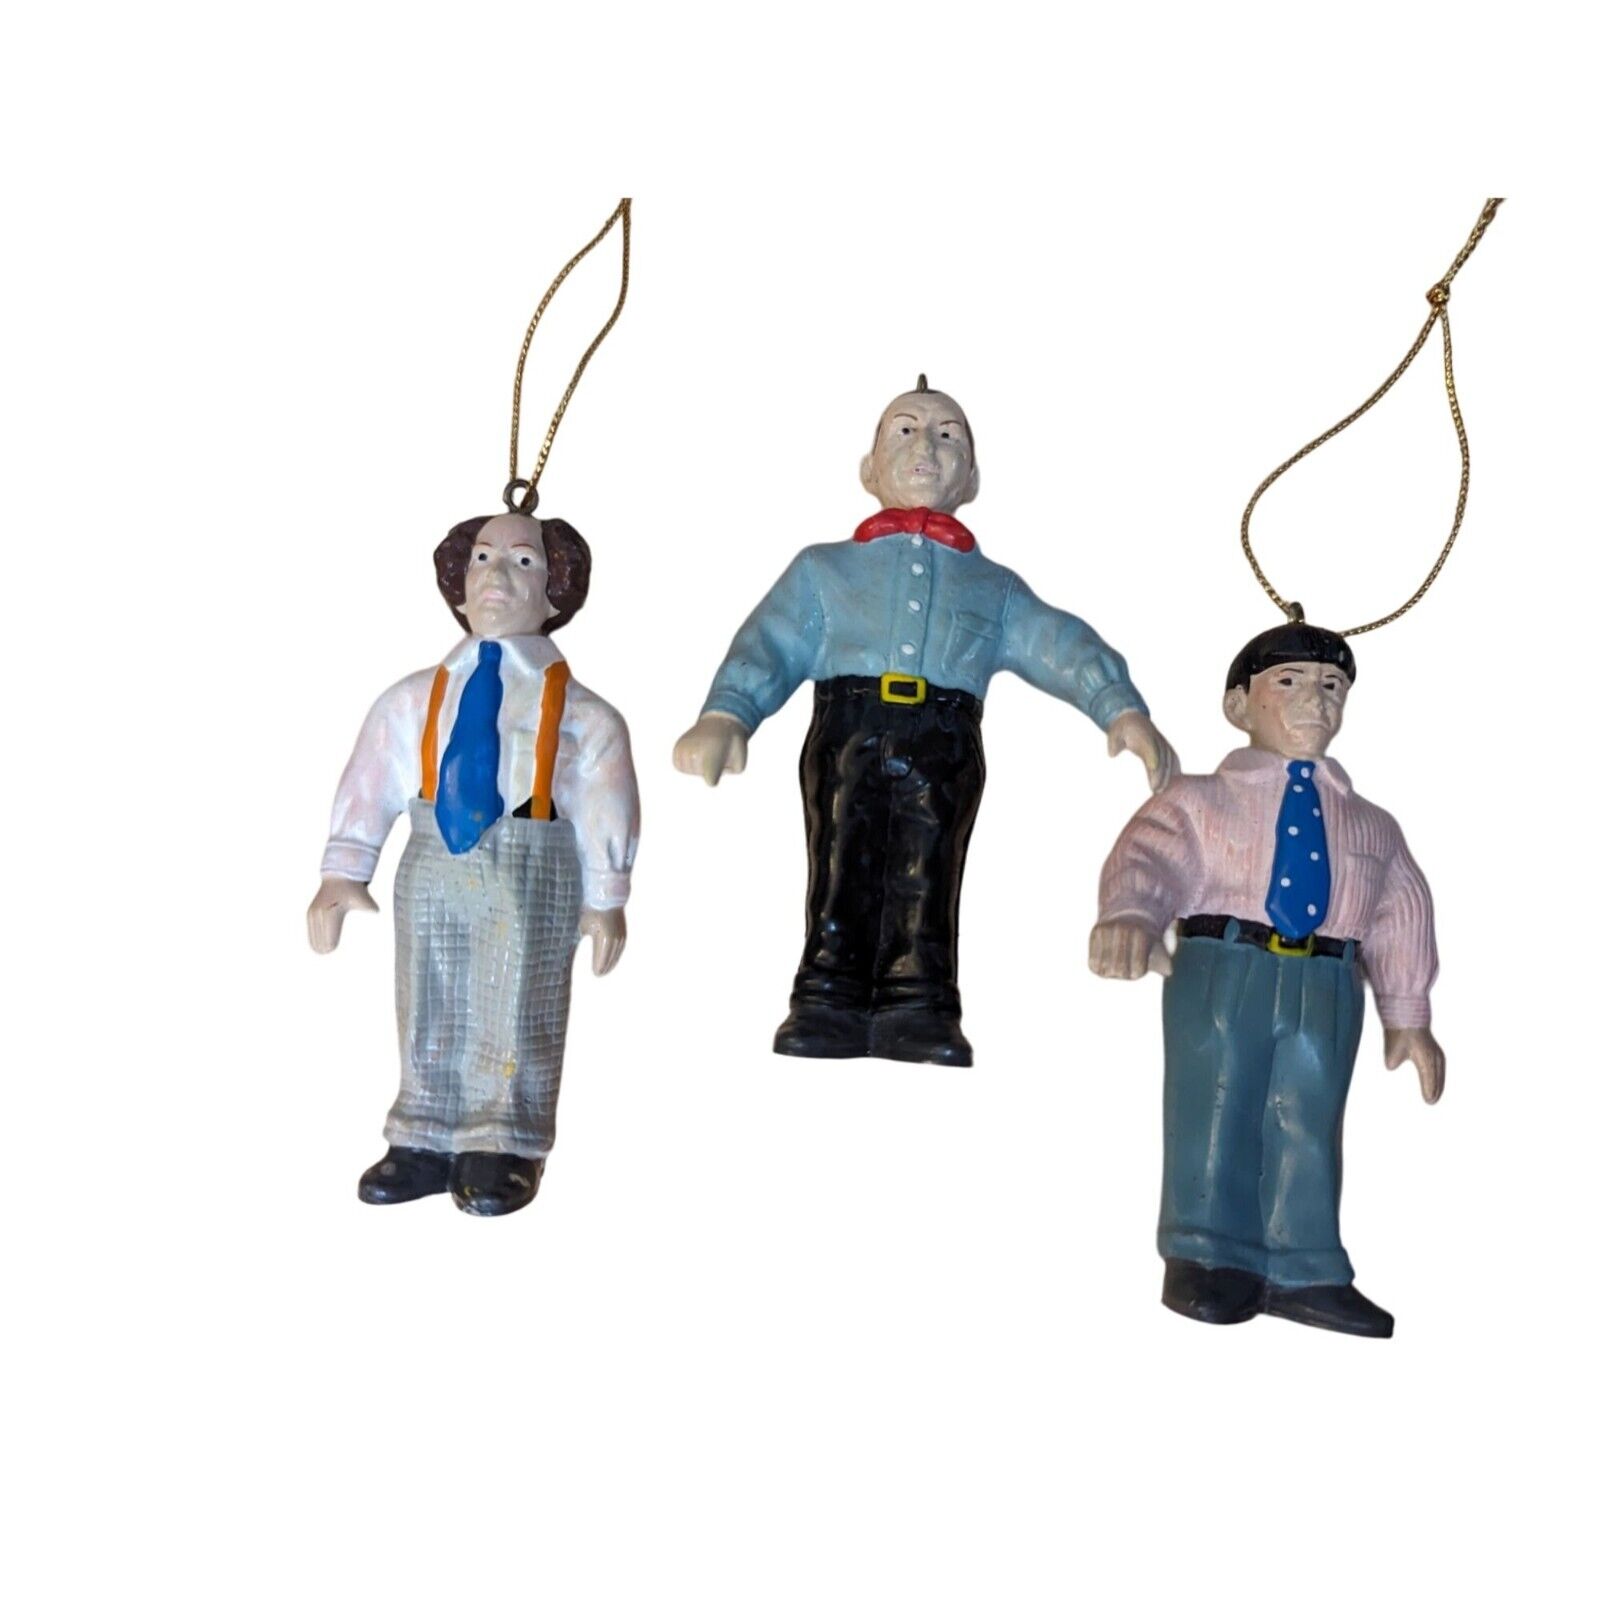 3 1991 Three Stooges 3.75 inch PVC rubberish Larry Moe & Curly figure ornaments